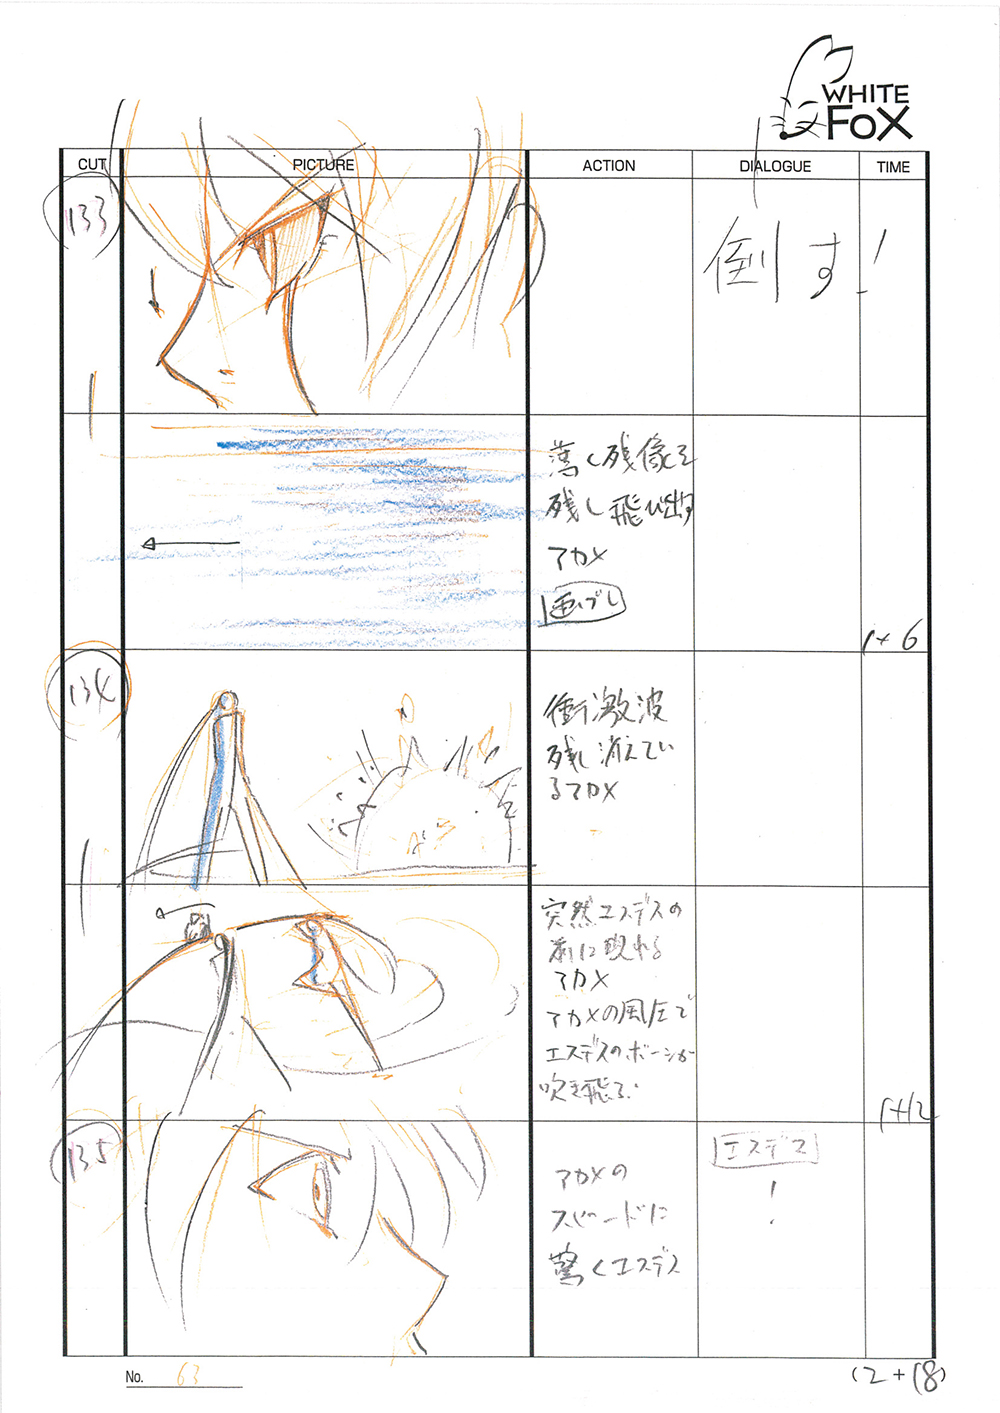 Akame ga Kill Episode 24 Storyboard Leak 066